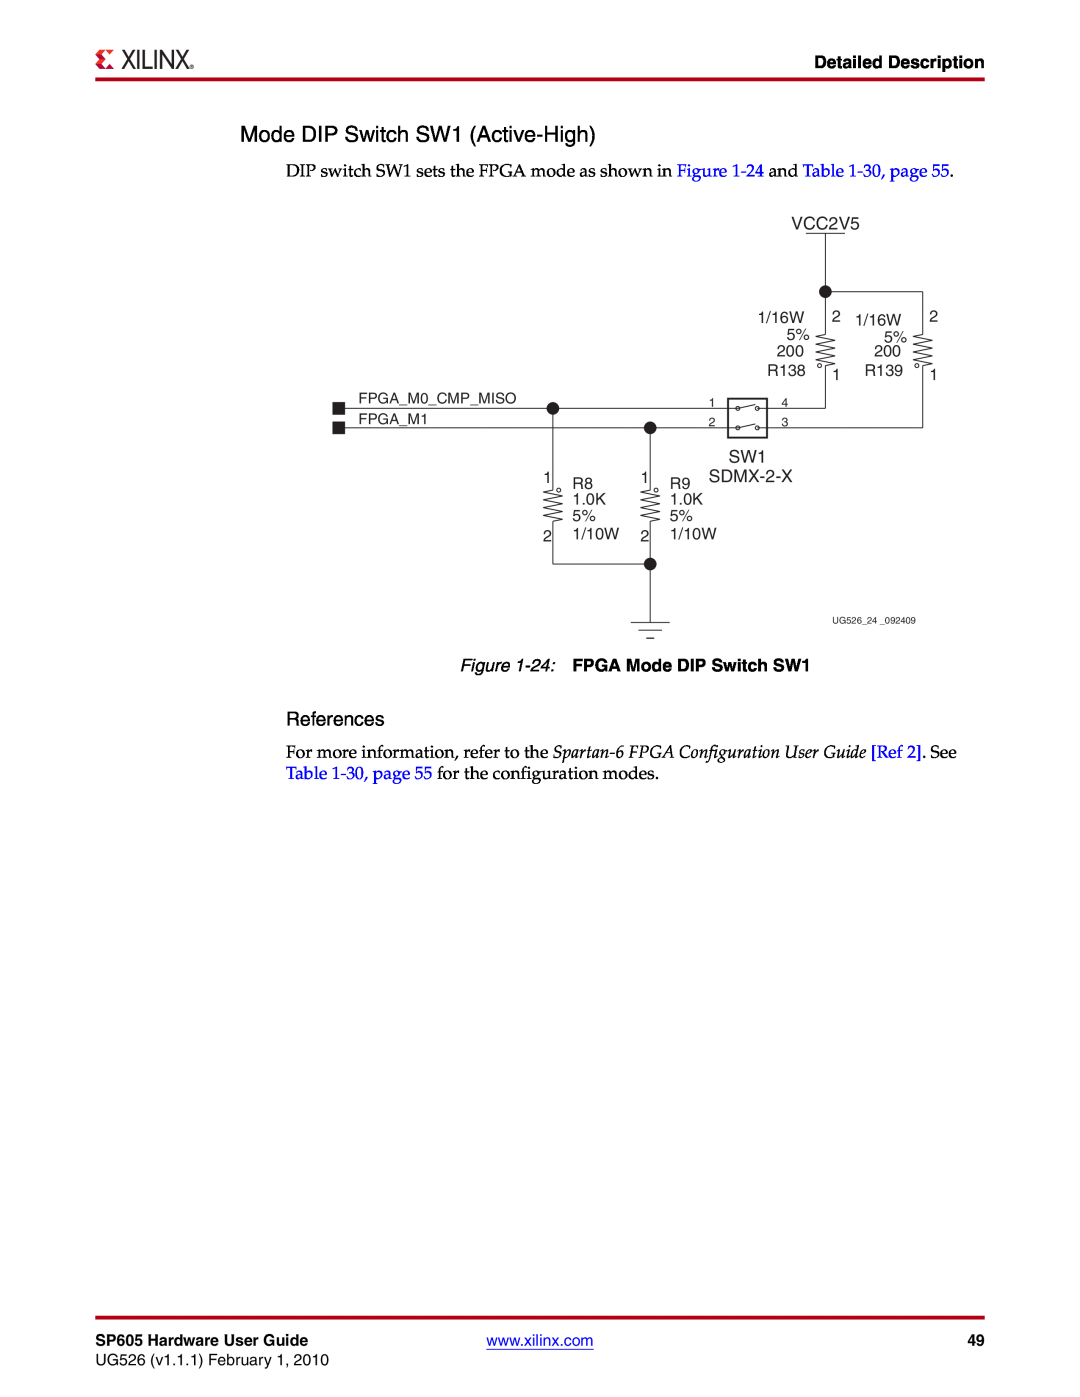 Xilinx SP605 Mode DIP Switch SW1 Active-High, R9 SDMX-2-X, 24 FPGA Mode DIP Switch SW1, References, Detailed Description 